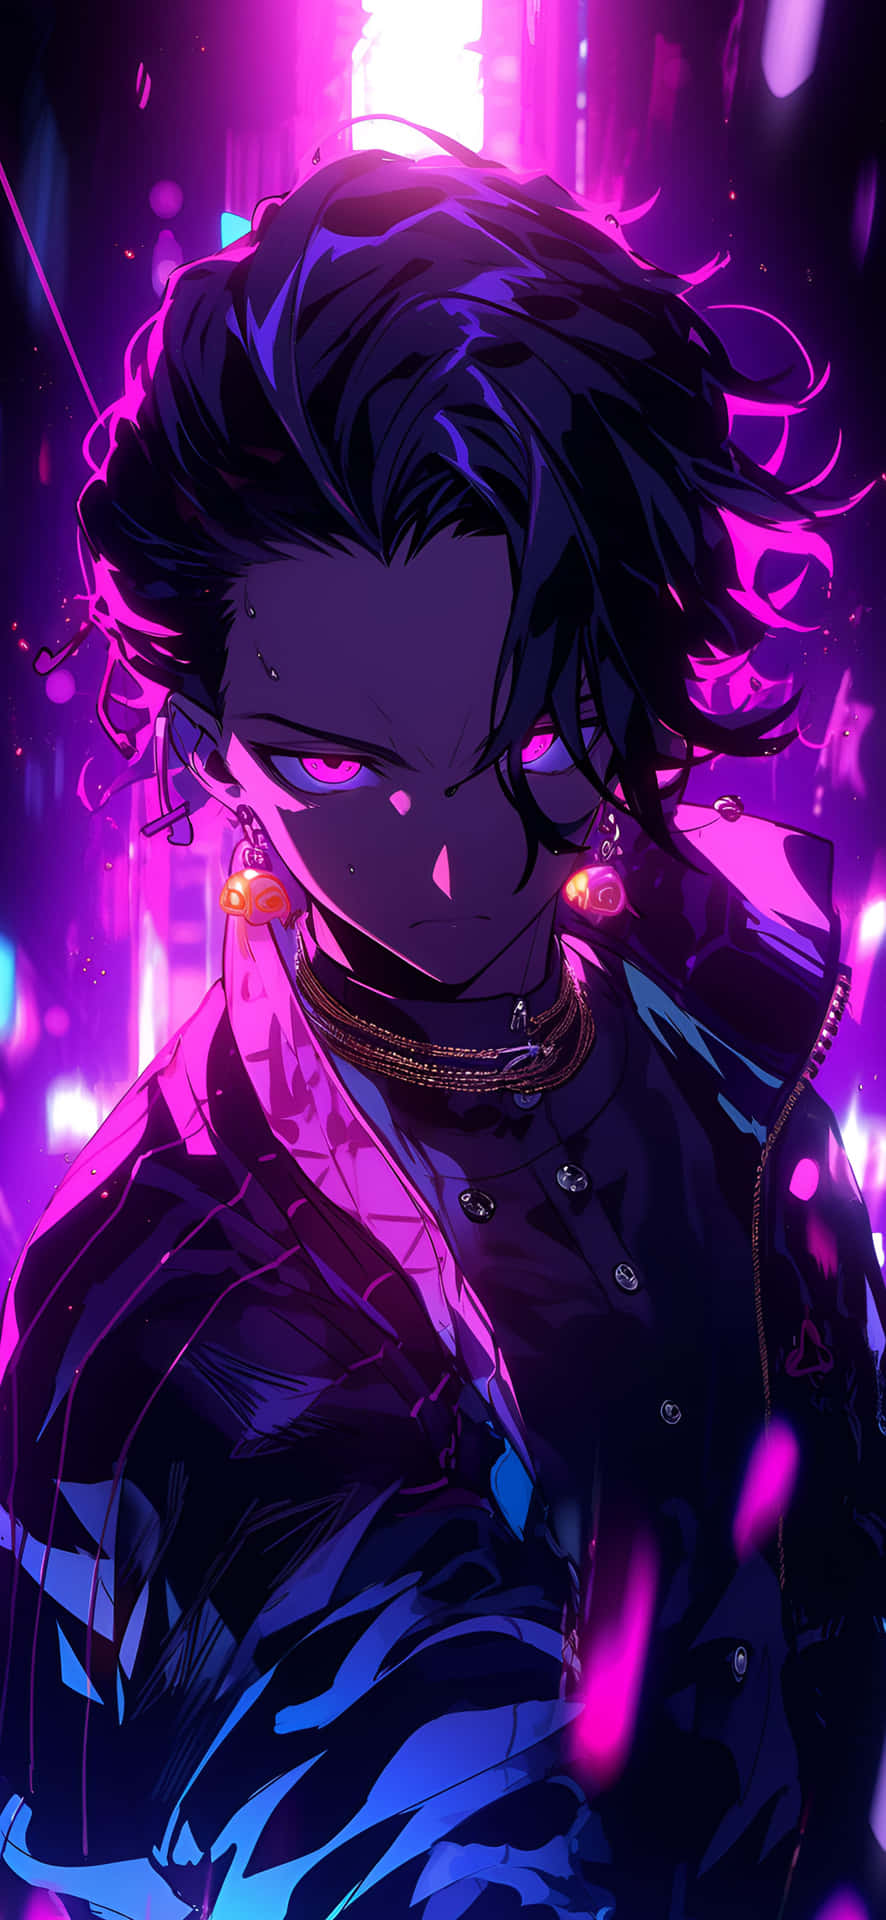 Mysterious_ Anime_ Boy_in_ Purple_ Light Wallpaper